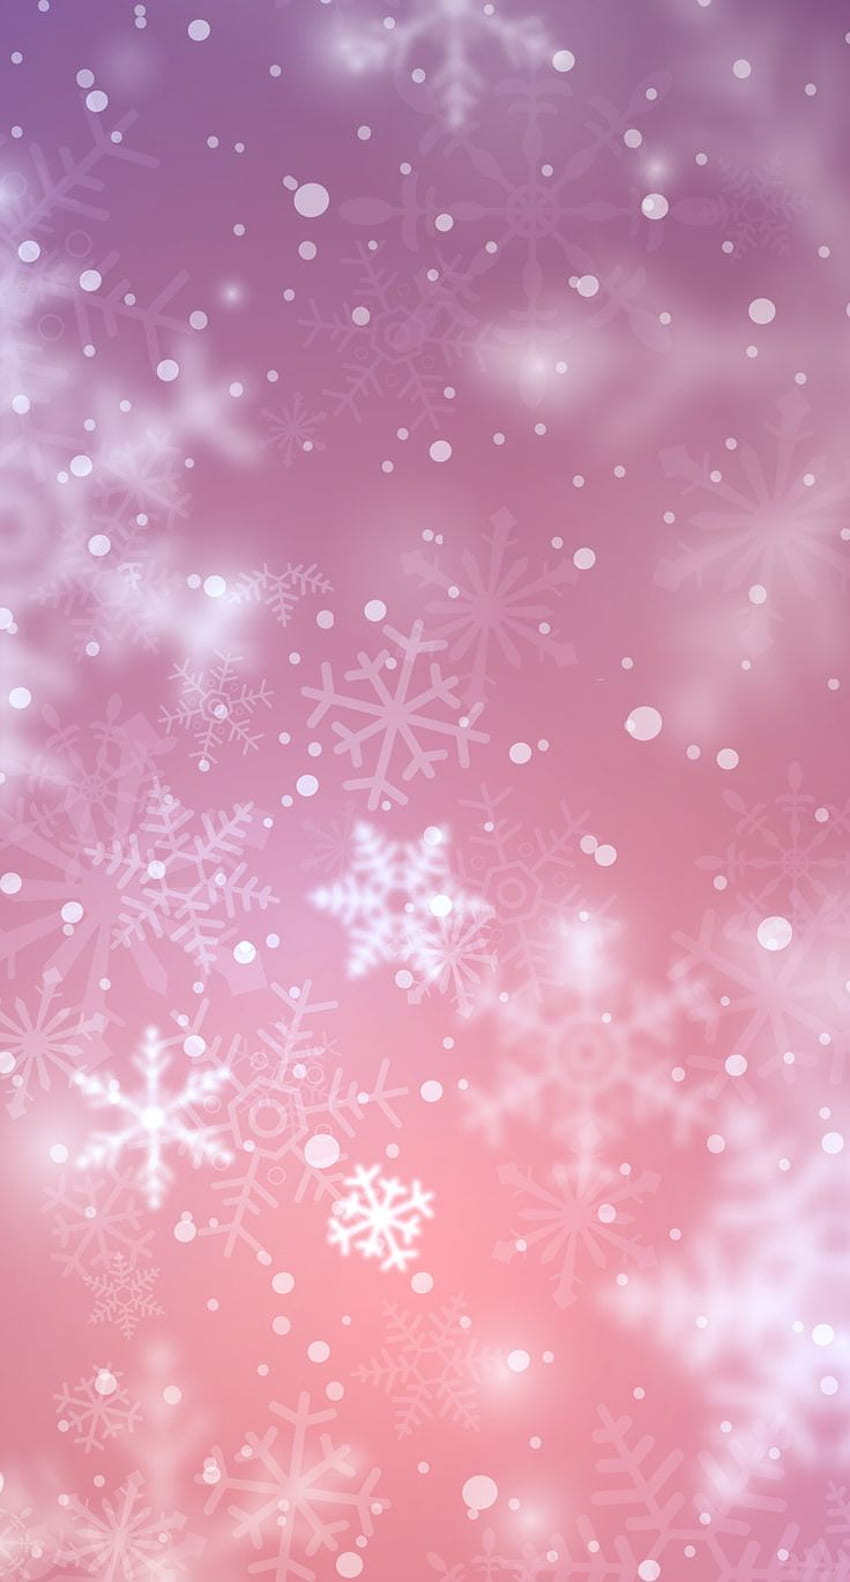 Christmas snowflake iPhone 6 plus wallpaper  balls floating ornaments   christmas snowflake iphone 6 plus wallpaper Christmas themed iPhone 6 plus